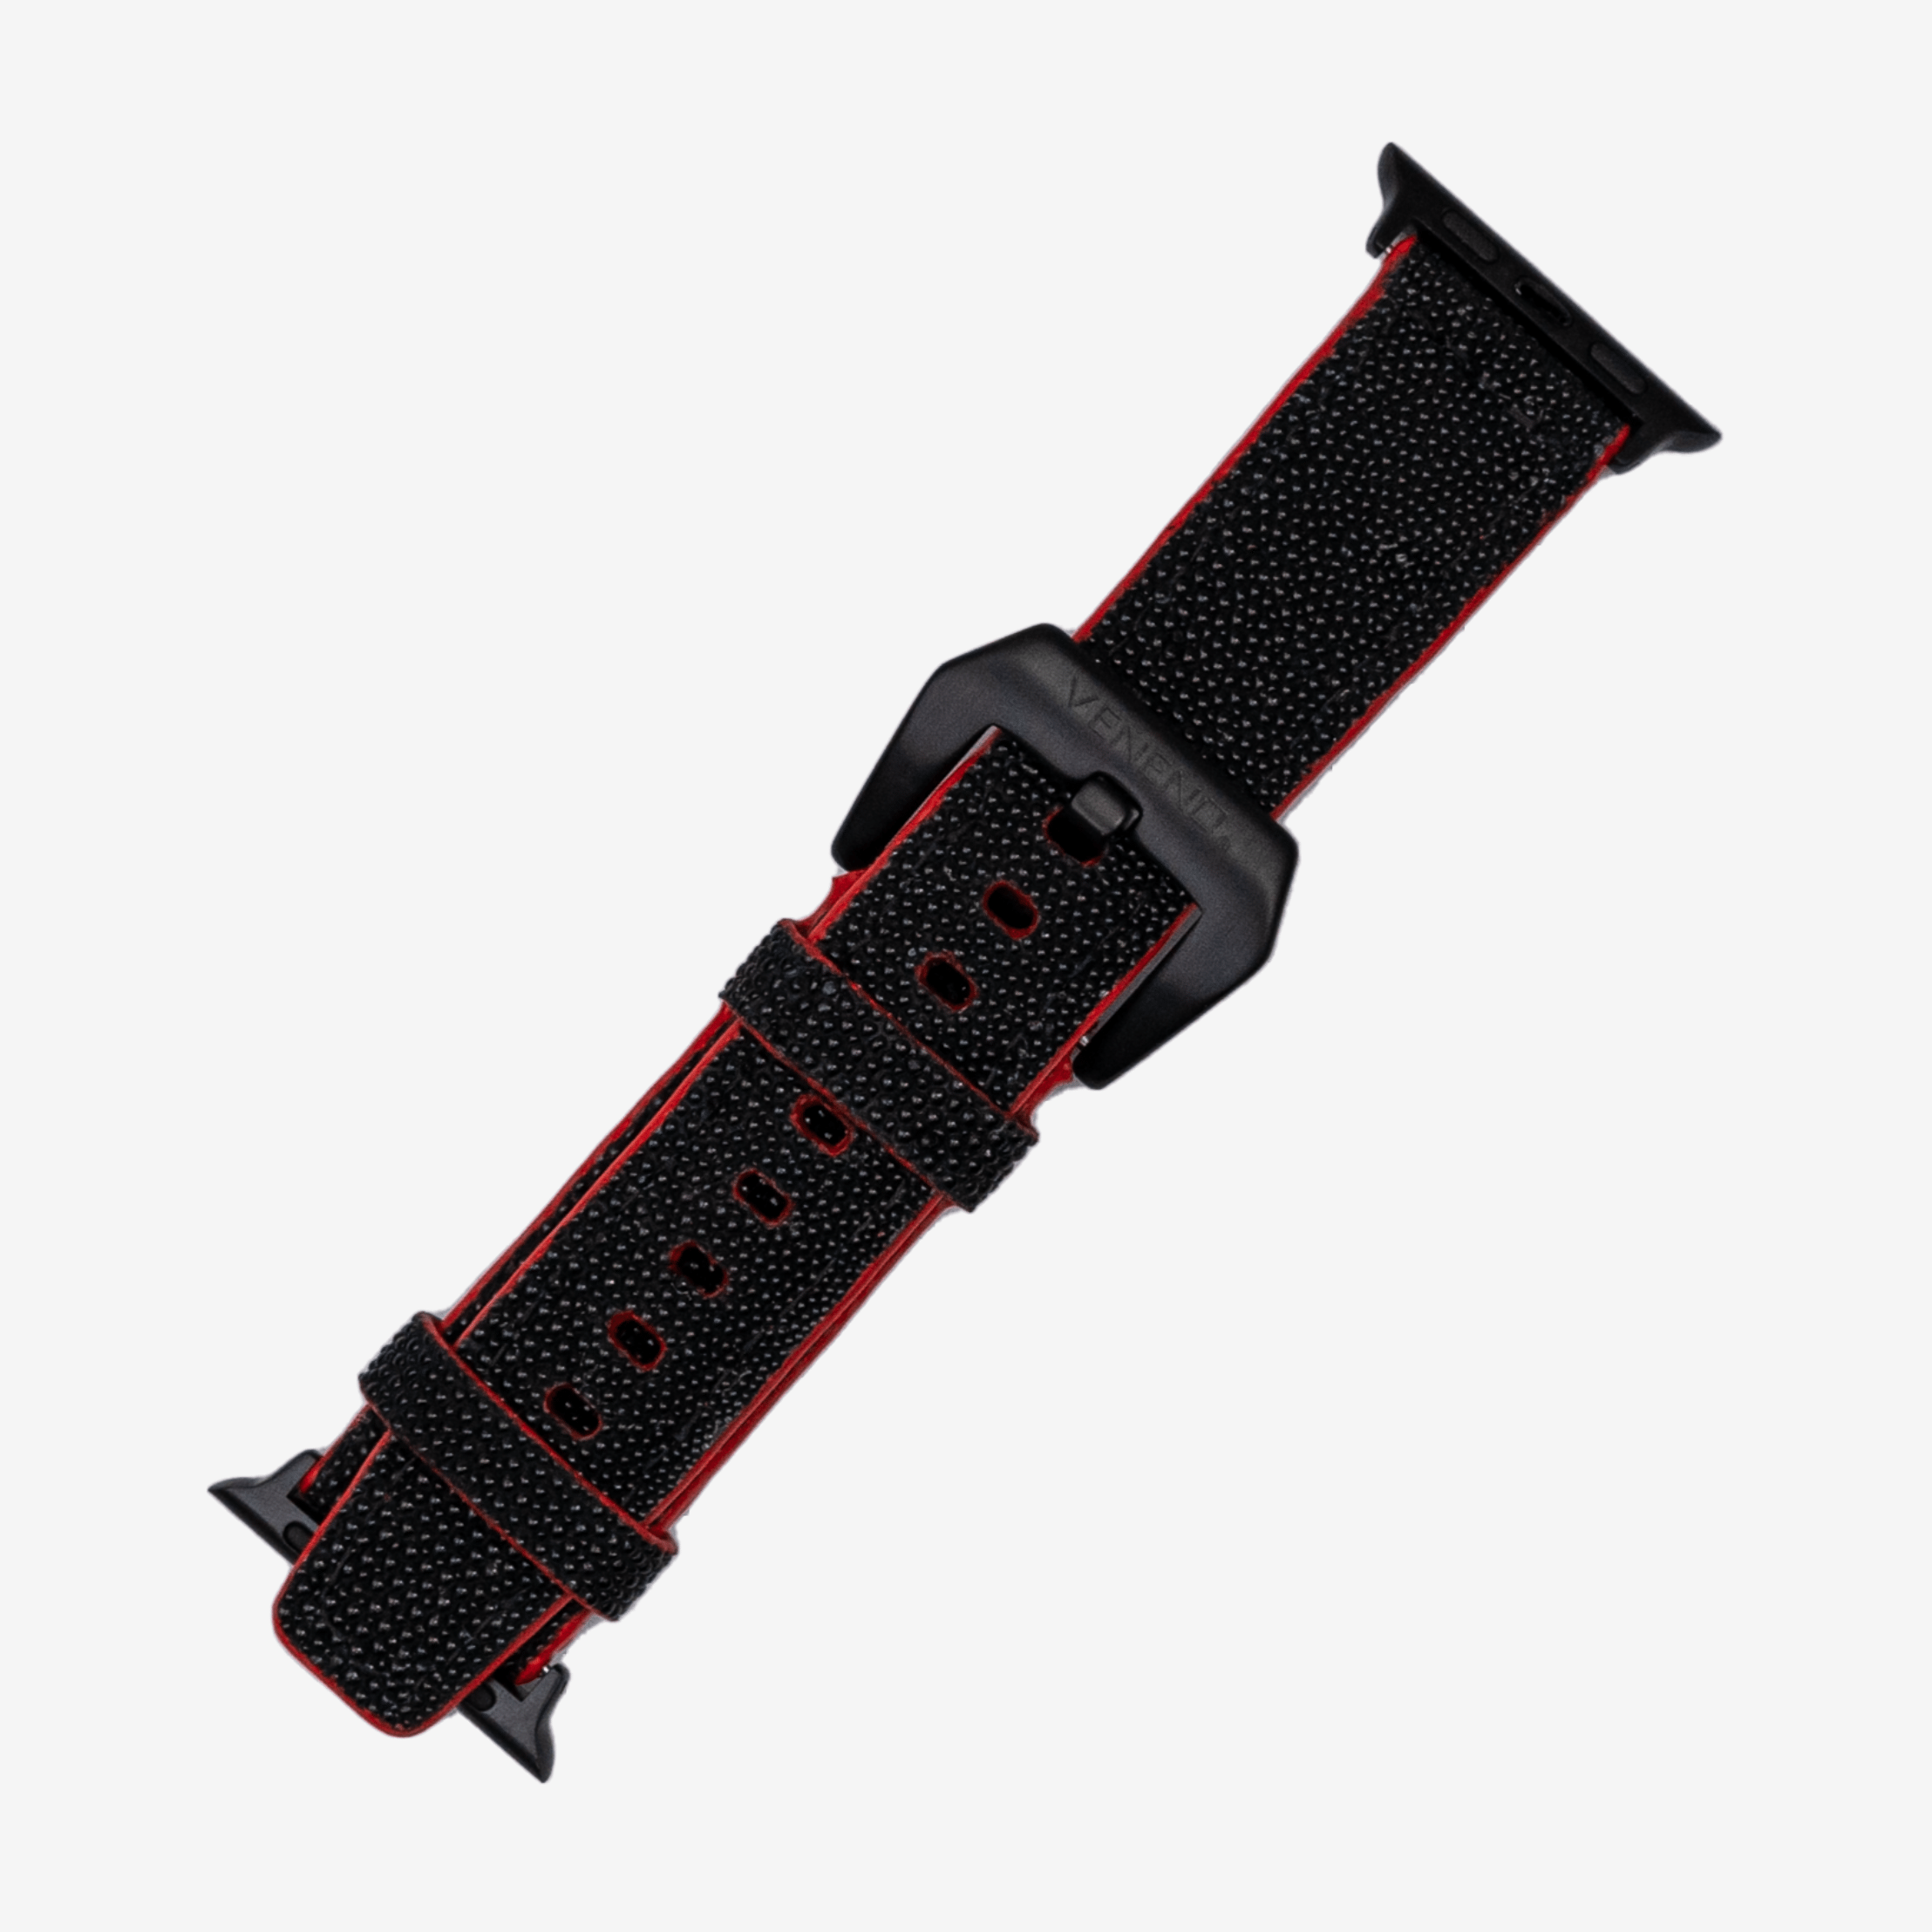 Veneno "Apple Watch Straps 38/40/41 mm" Stingray Black-Red